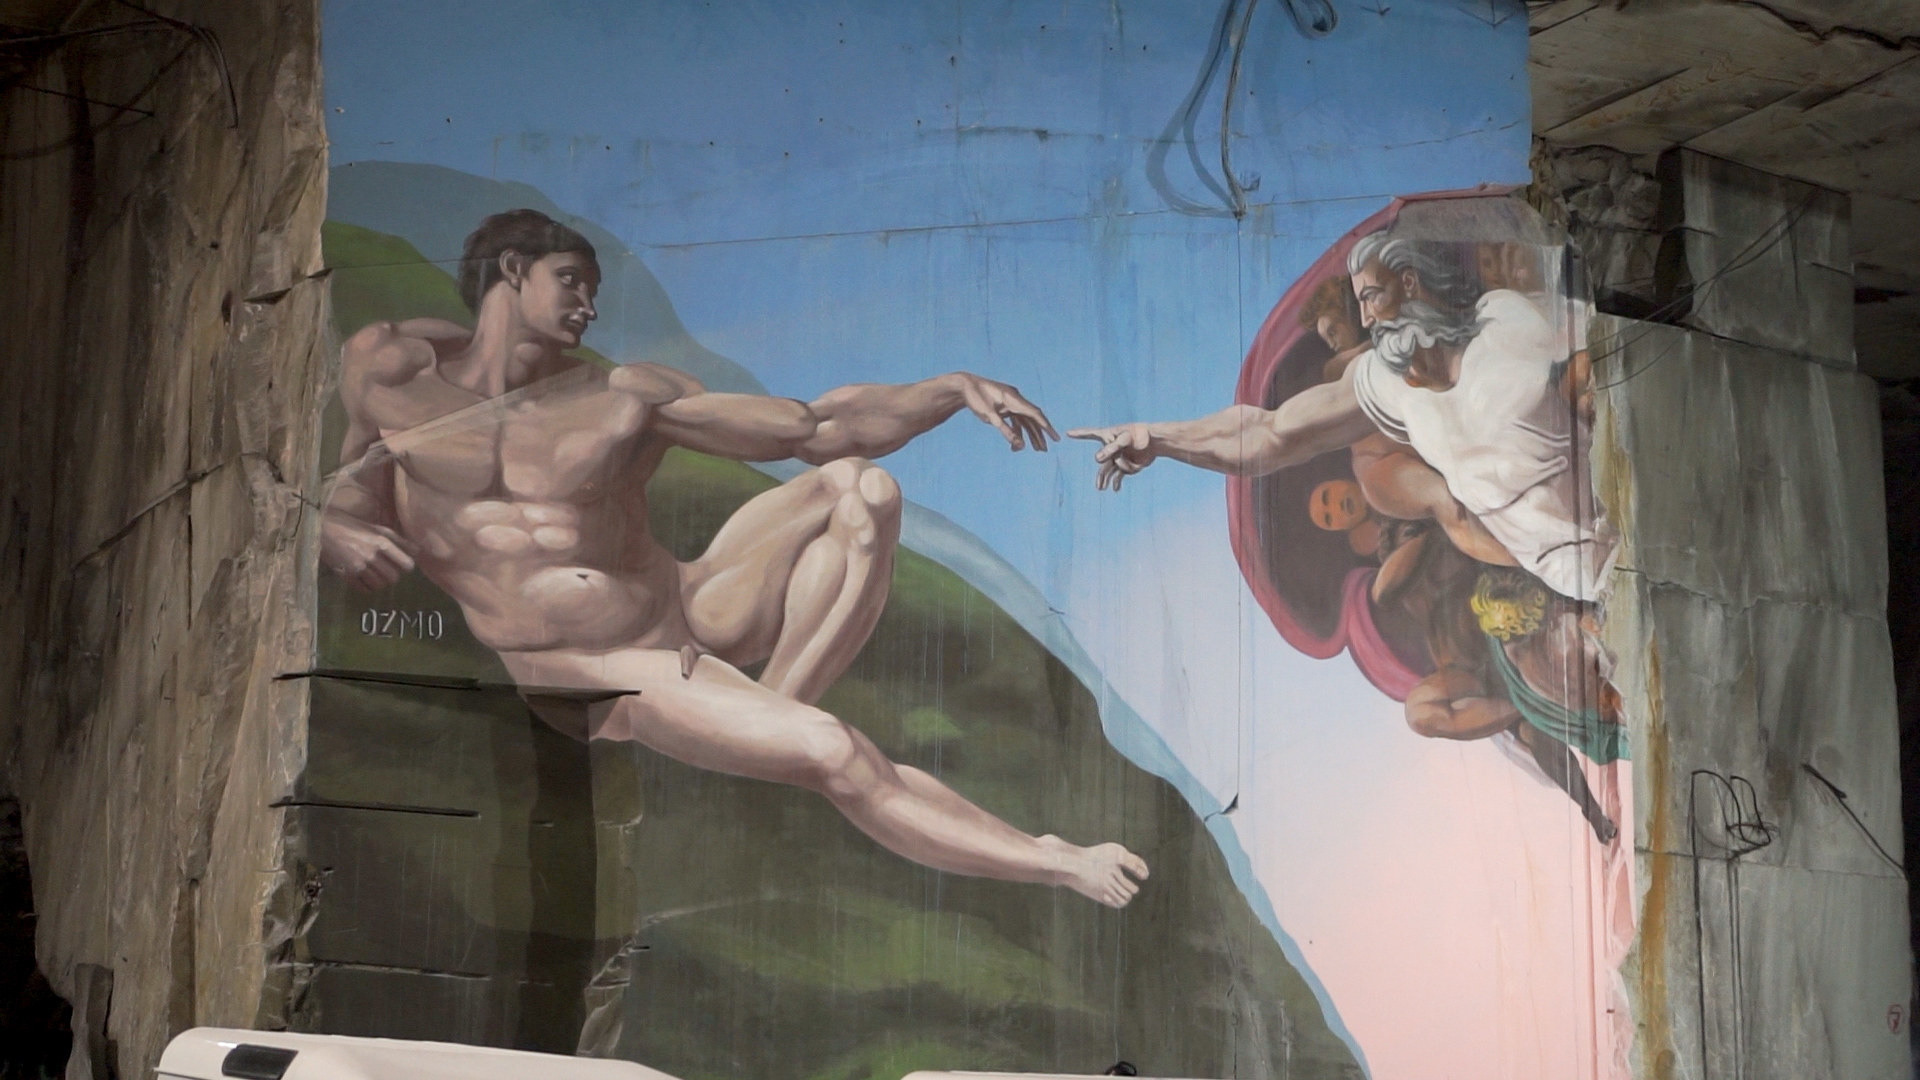 The genesis of Michelangelo by Ozmo